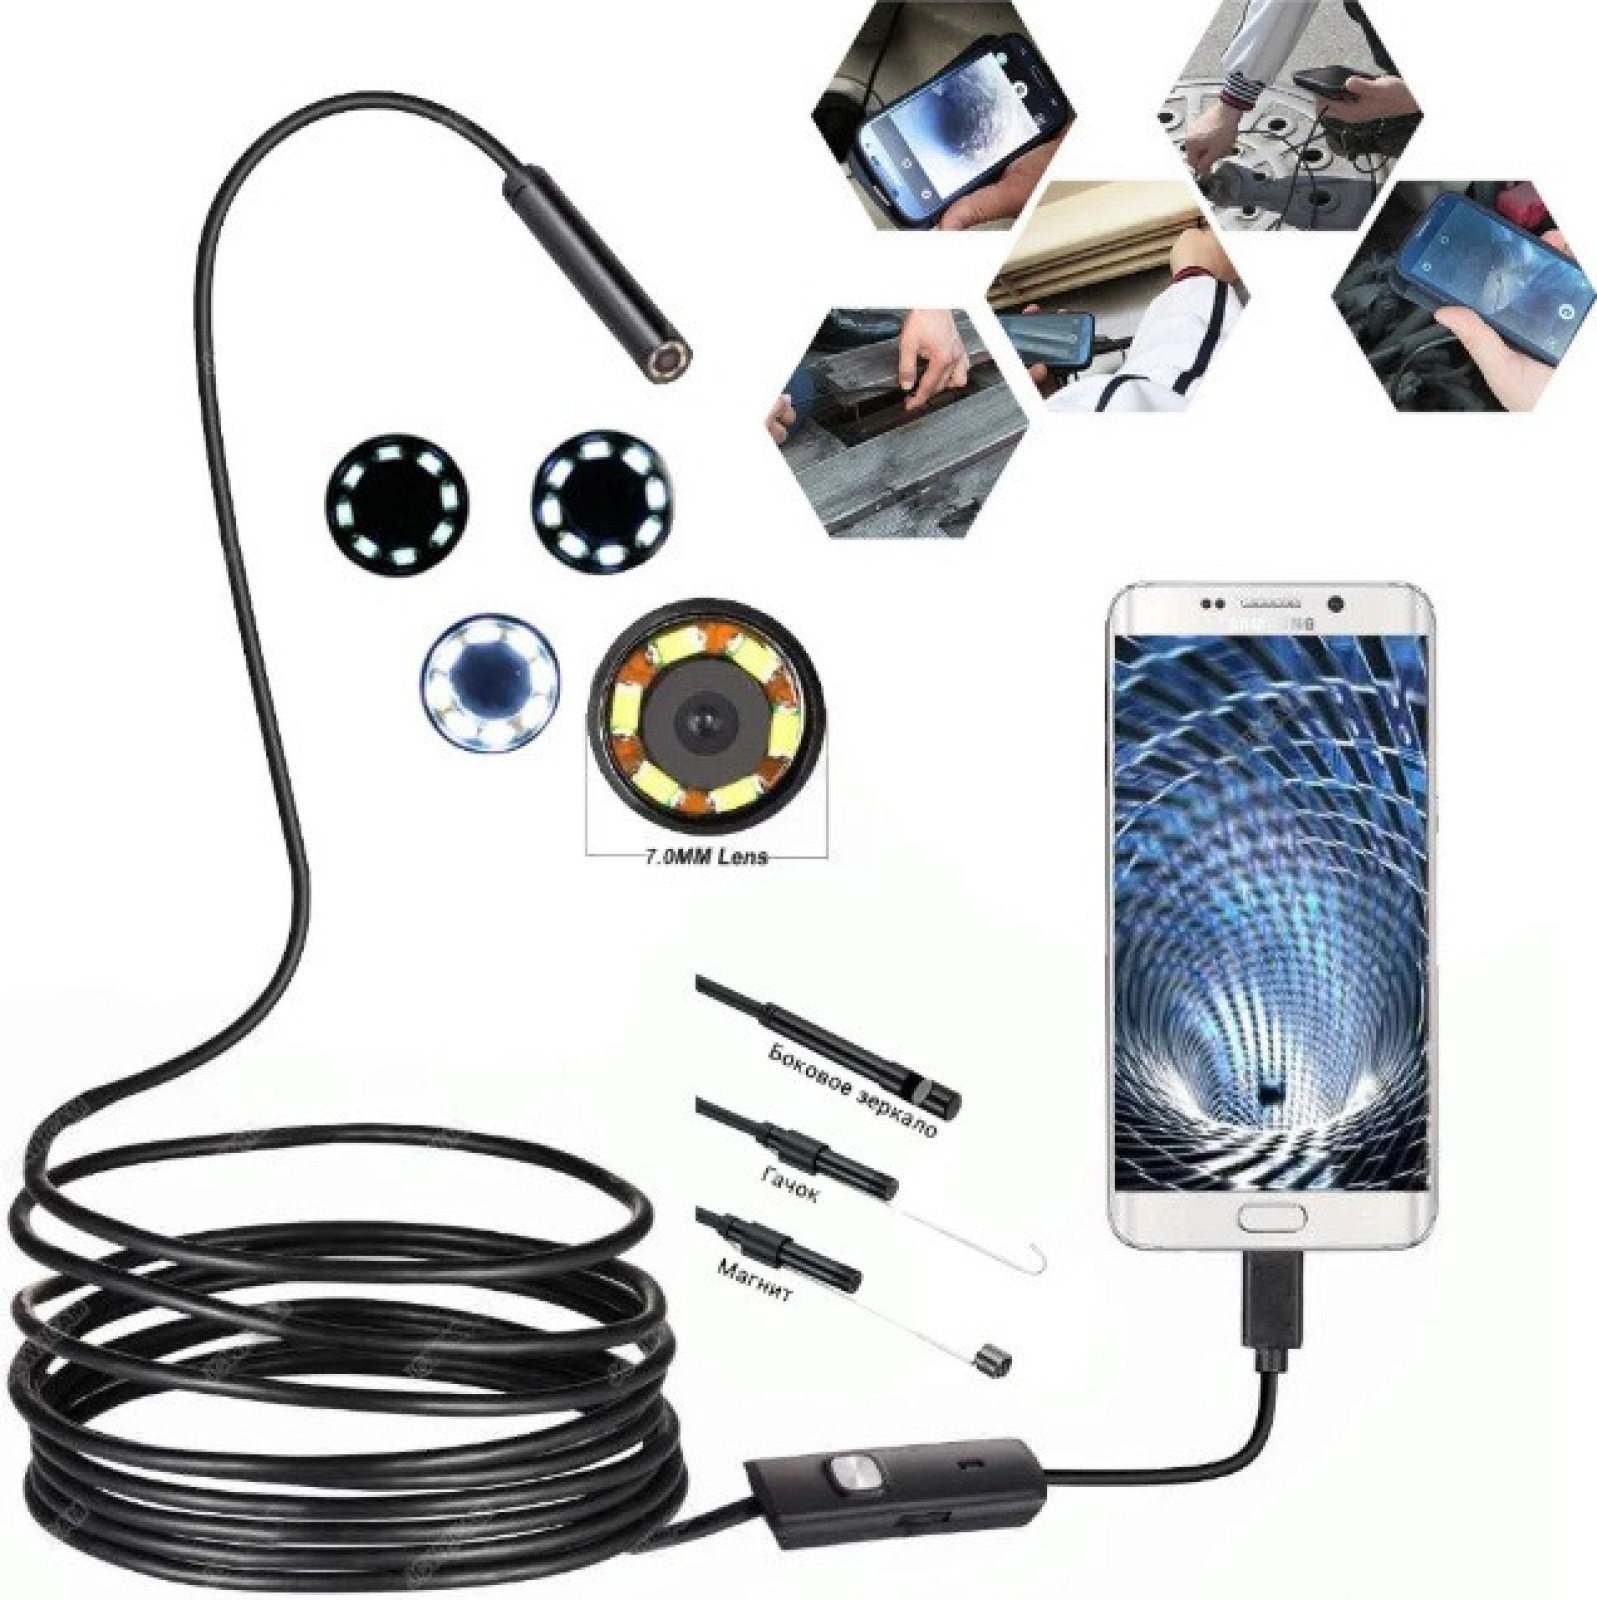 Камера Эндоскоп Android and PC Endoscope гибкая USB камера 2 метра эндоскопическая камера для смартфона, планшета, ноутбука 195568